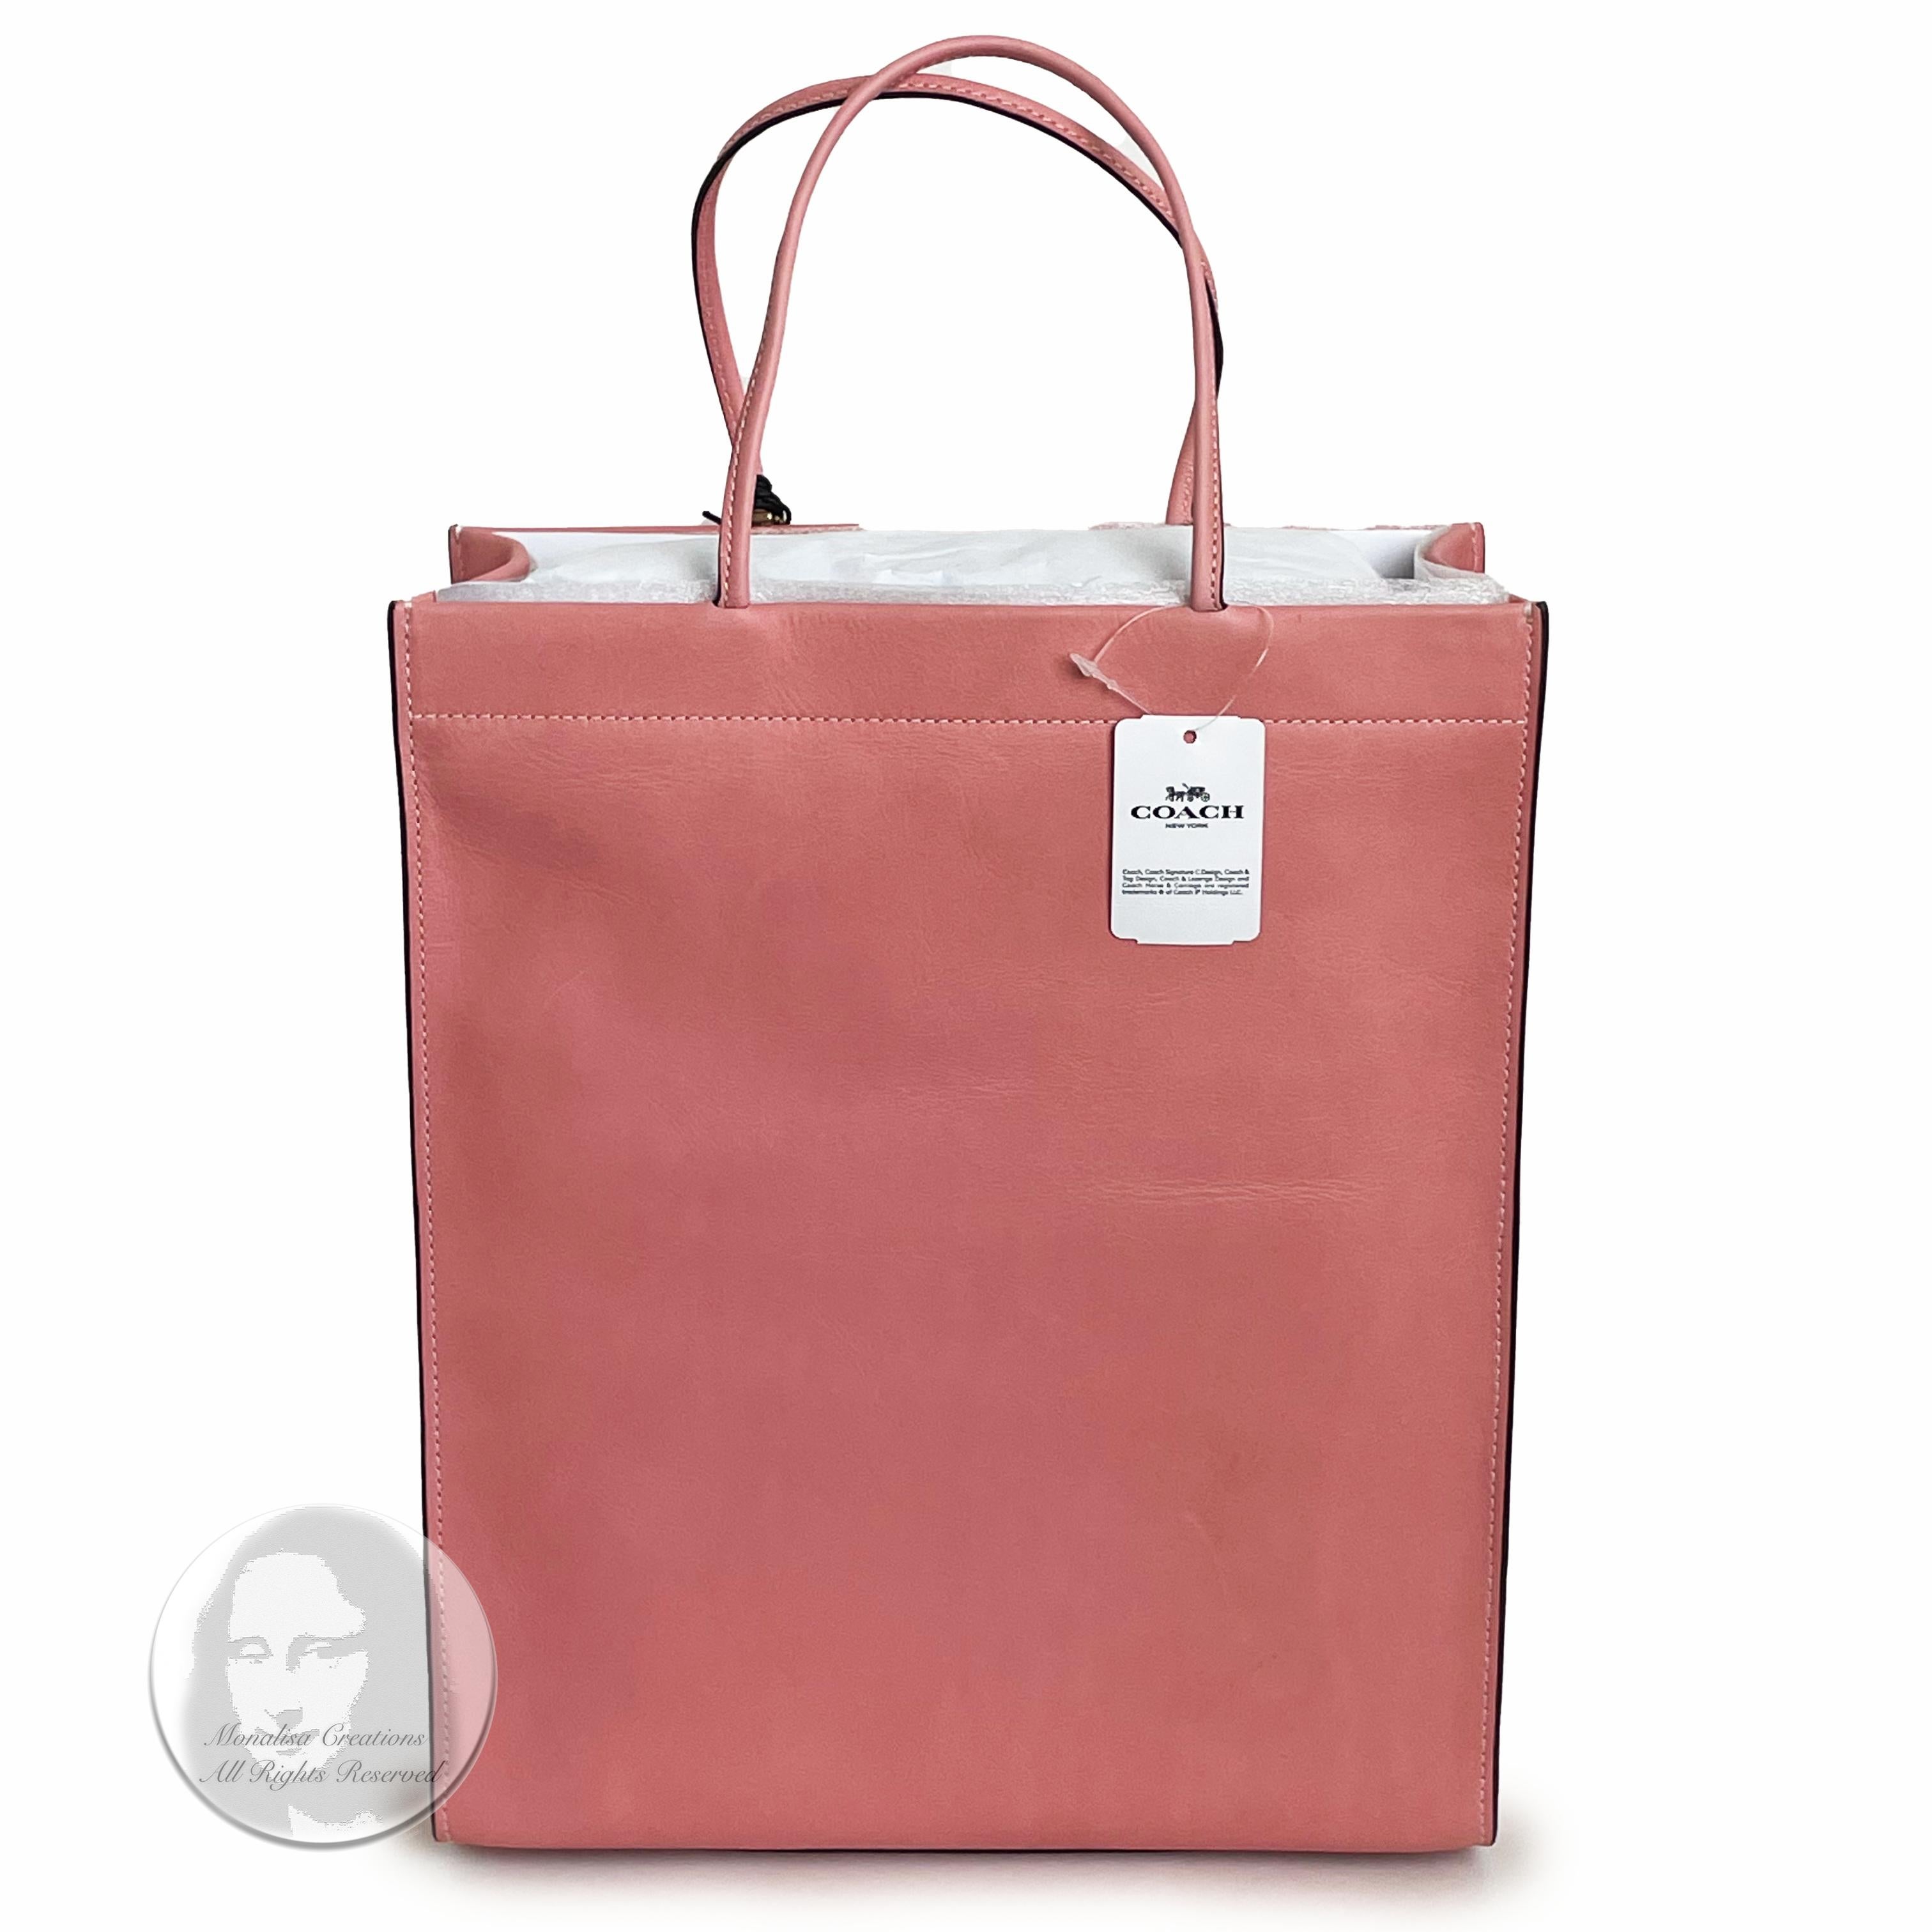 coach pink tote bag